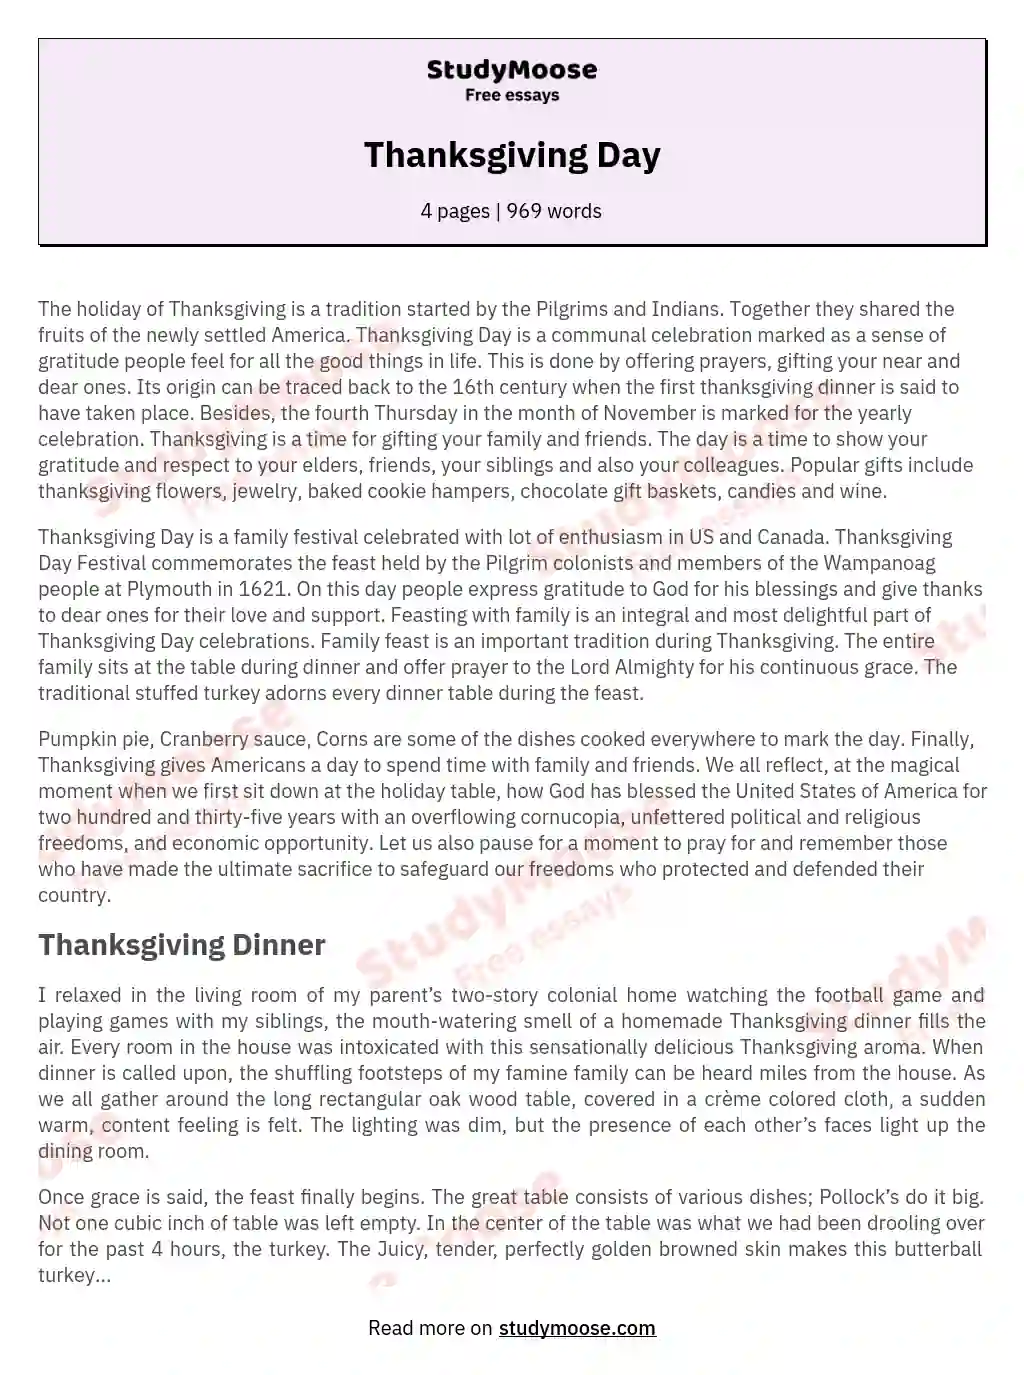 Thanksgiving Day essay